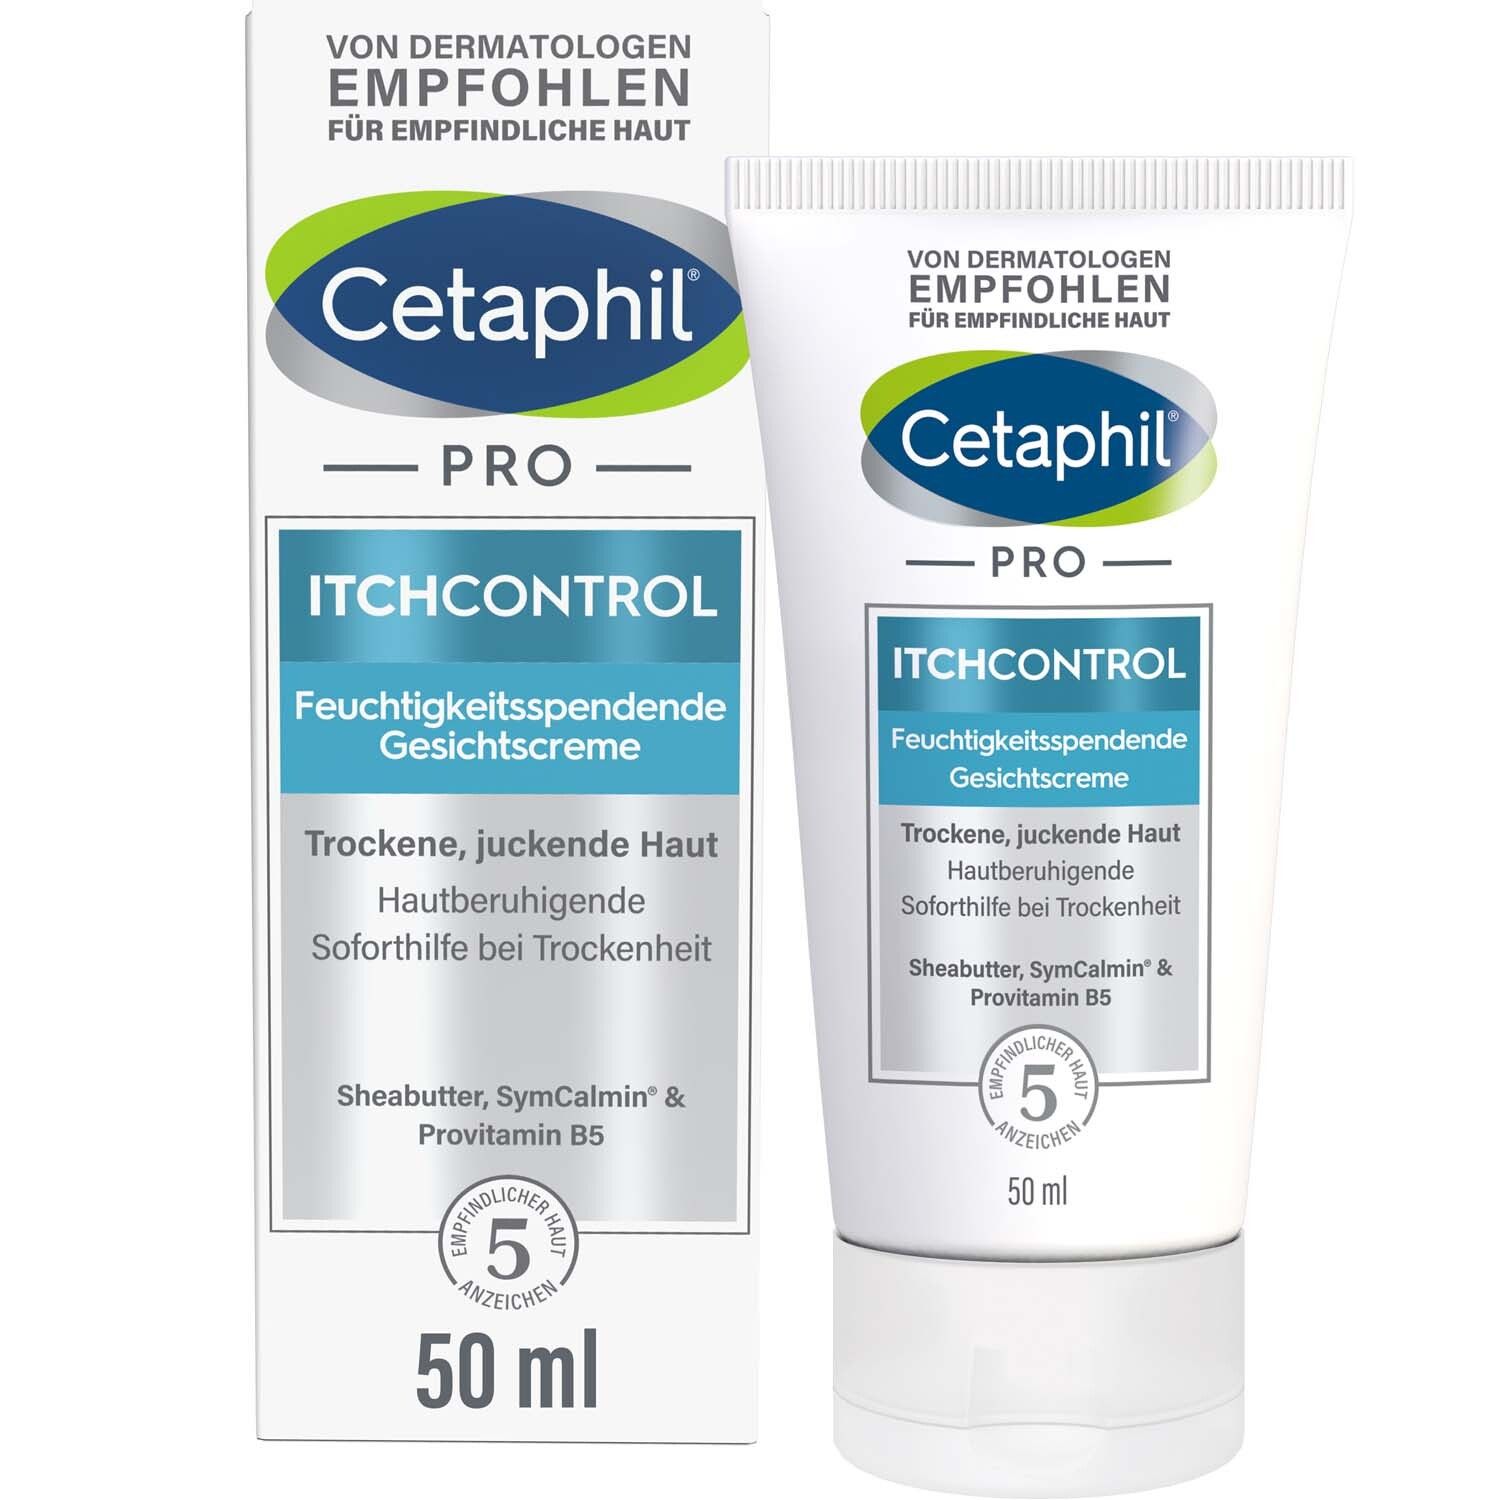 Cetaphil® PRO Itch Control Gesichtscreme